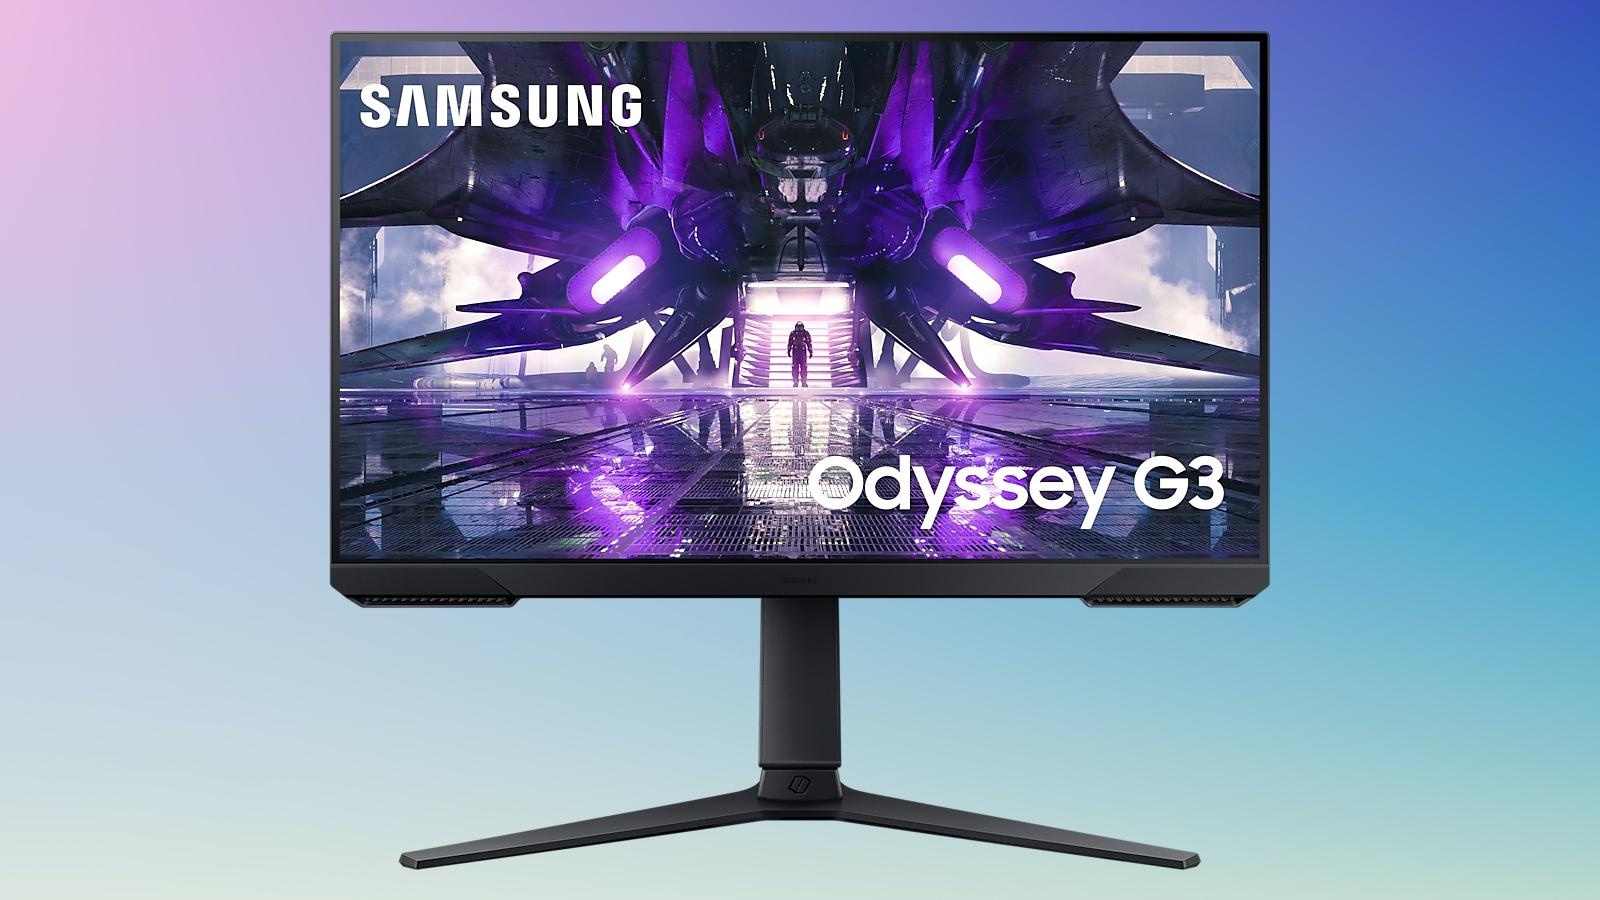 Samsung Odyssey G3 gaming monitor on blue background